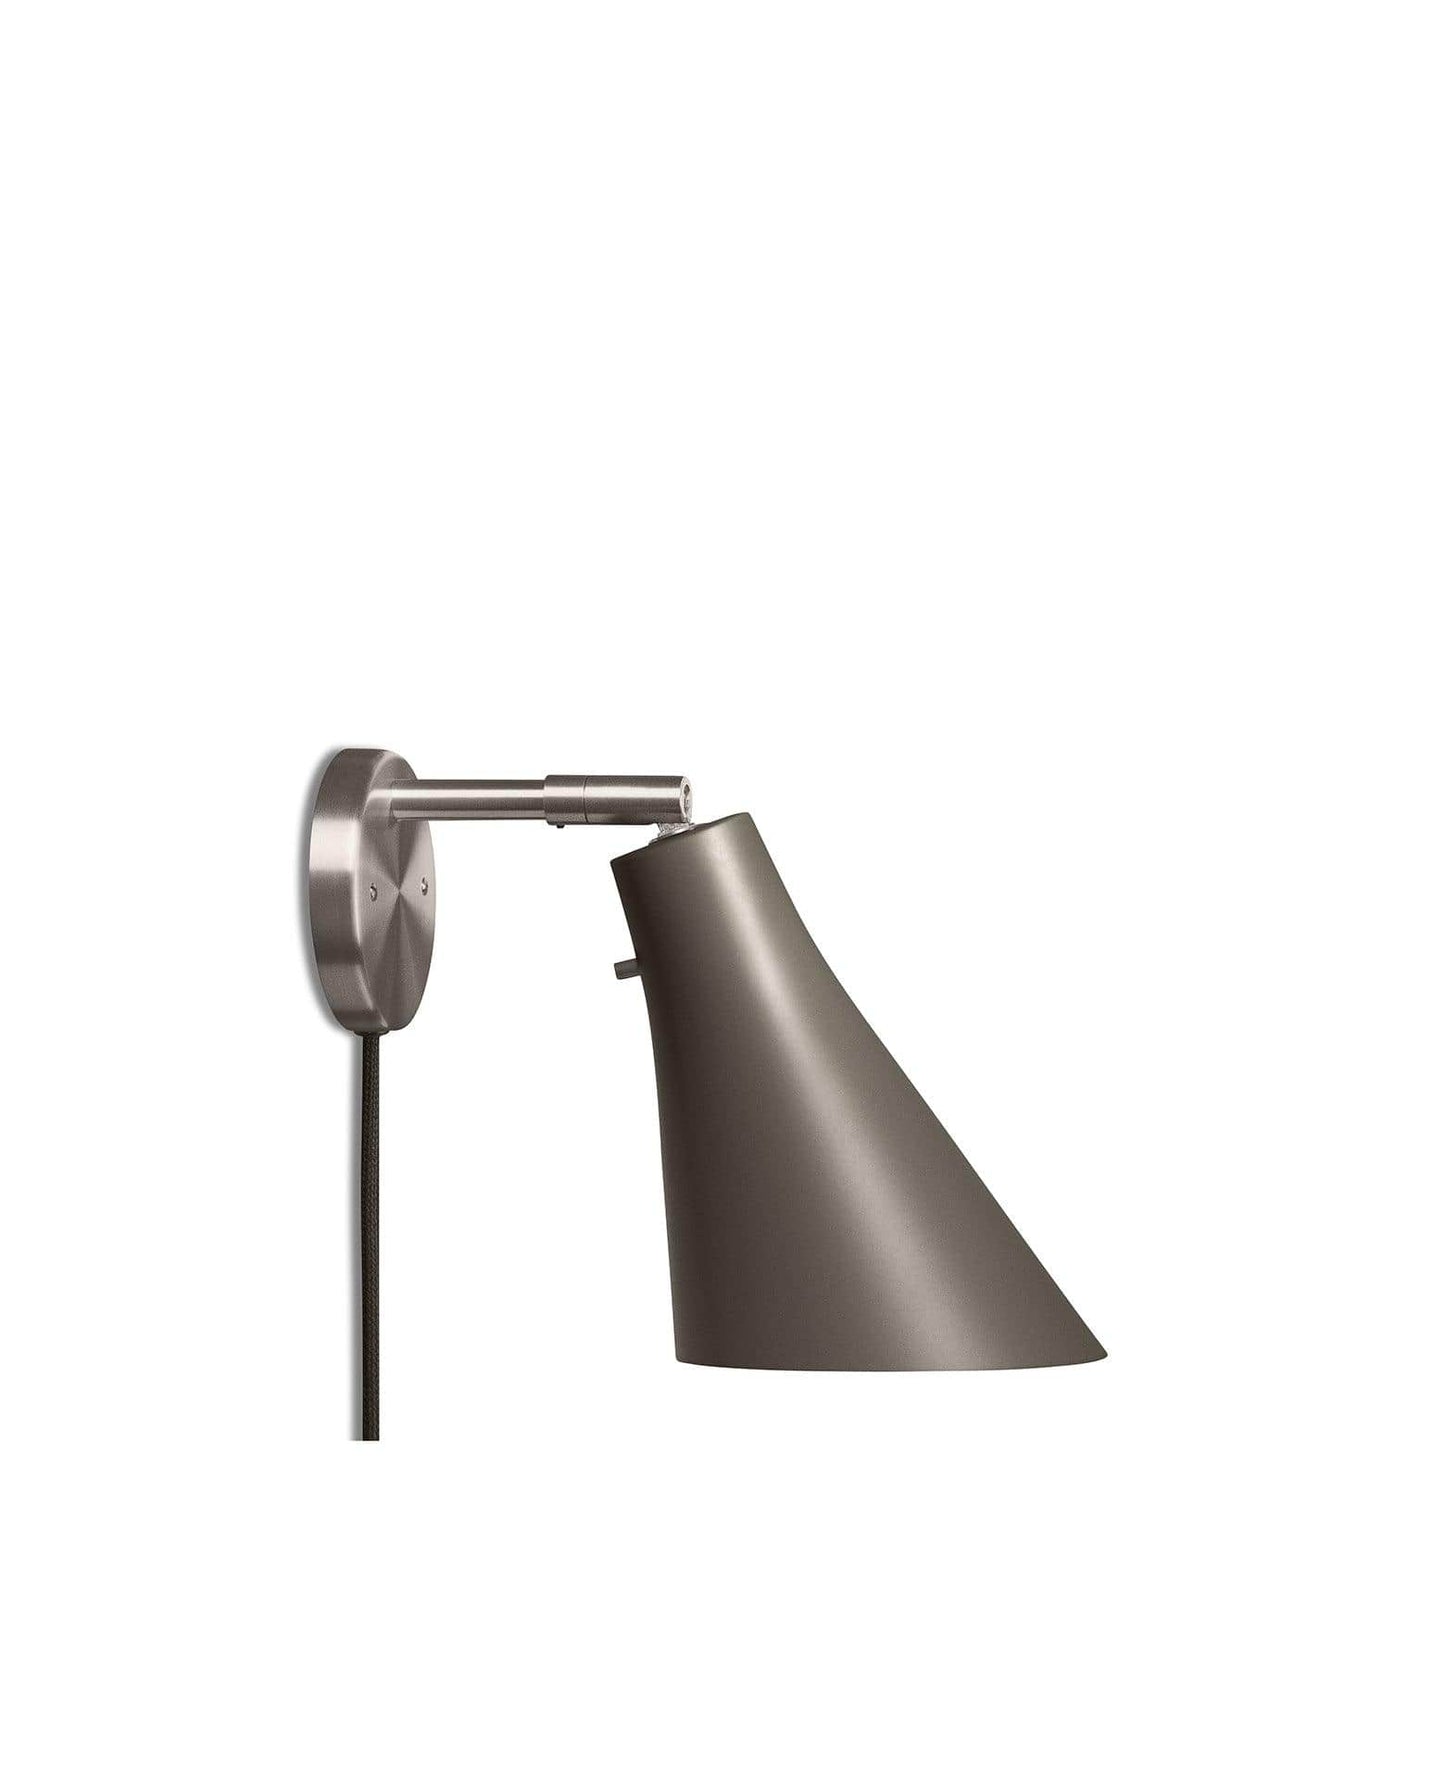 Miller Wall Lamp umbra grey steel